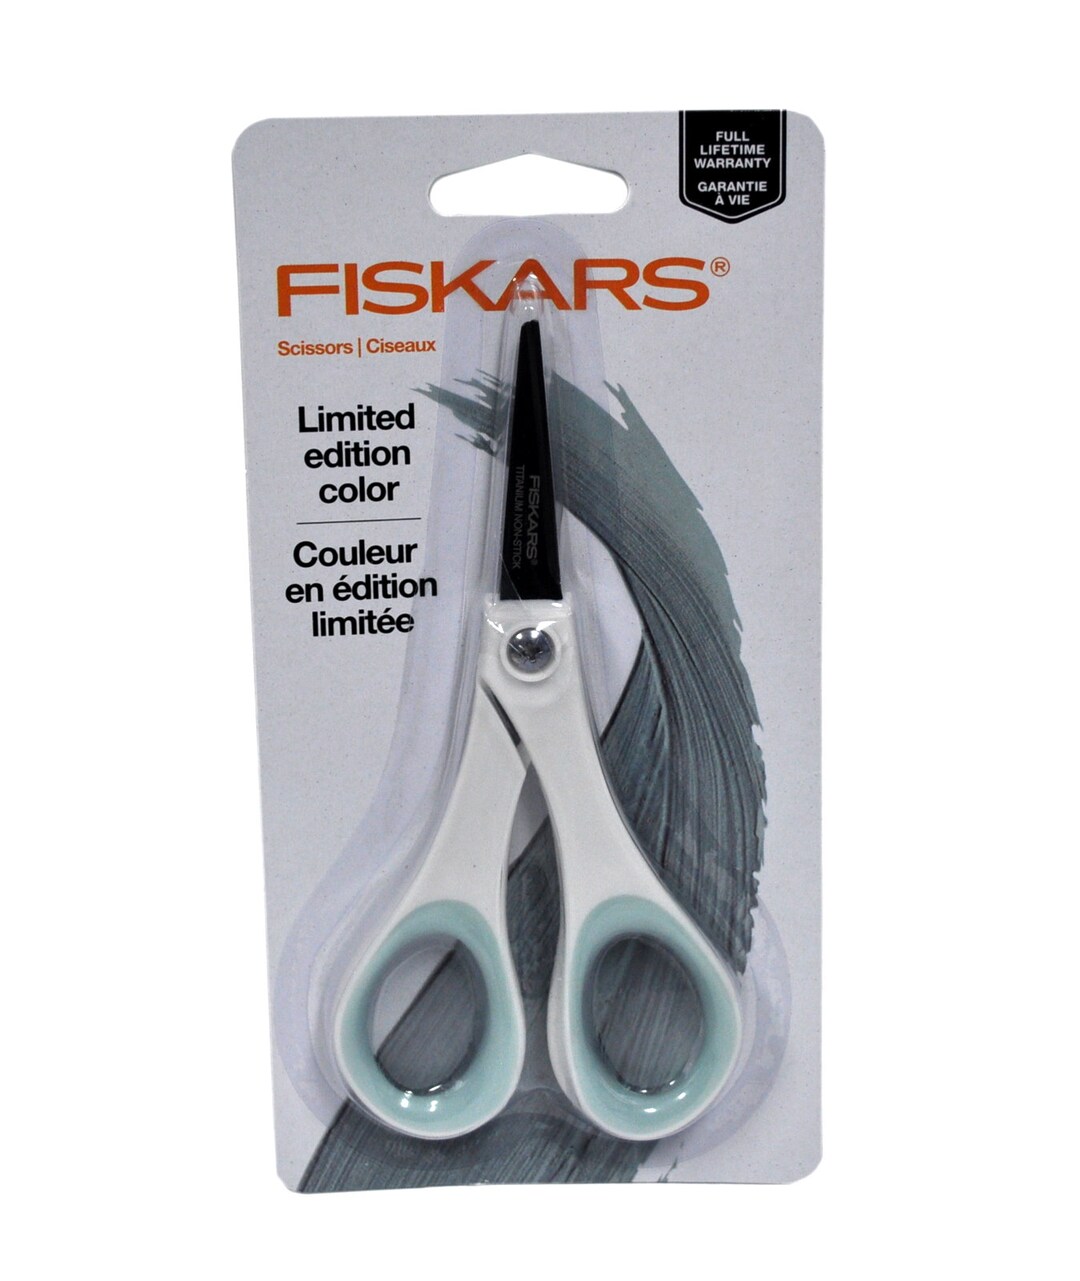 Fiskars 3pc Softgrip Titanium Scissors Set Purple